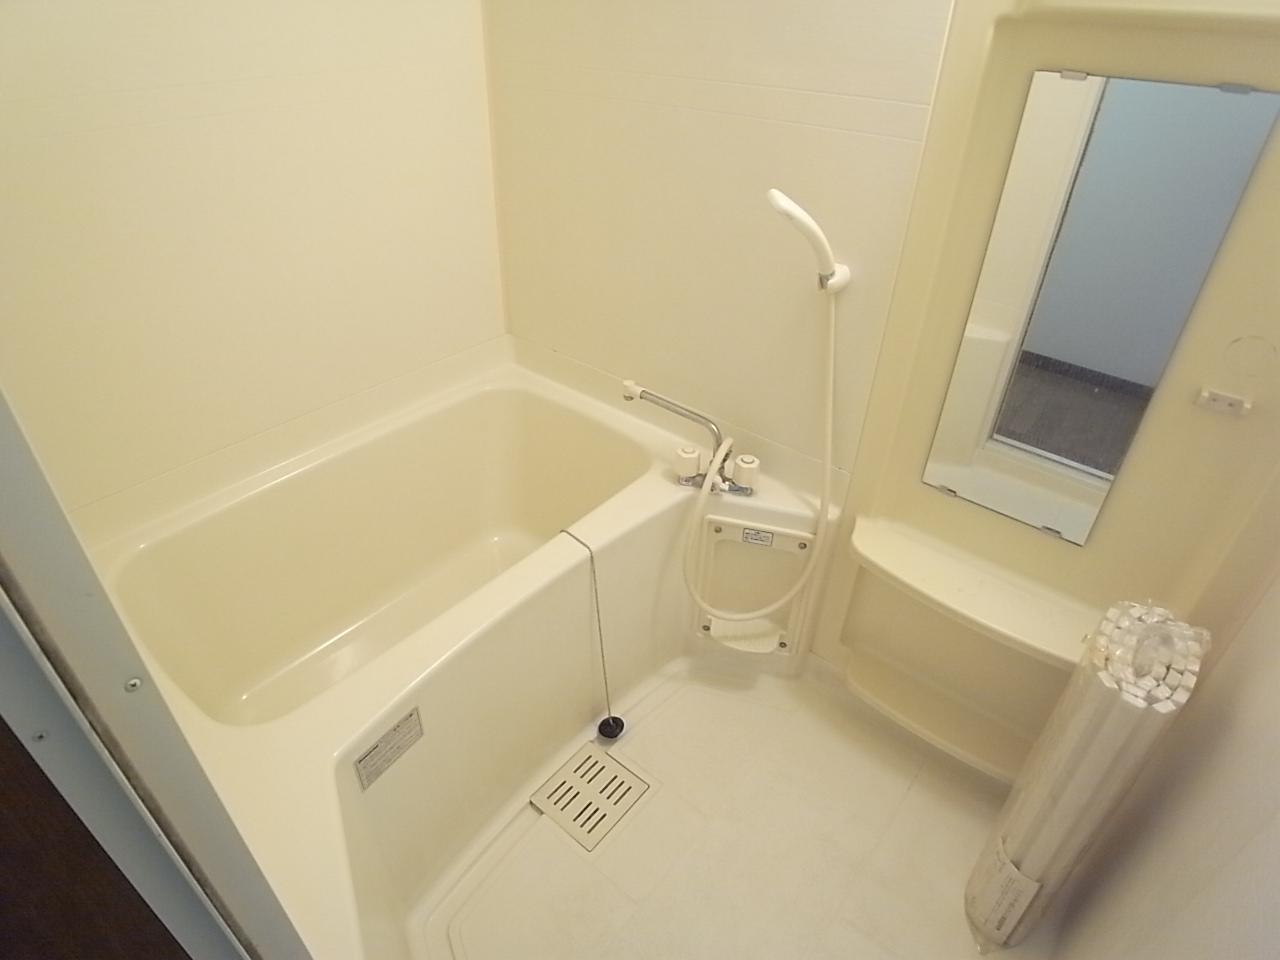 Bath. It is a convenient bathroom with a mirror